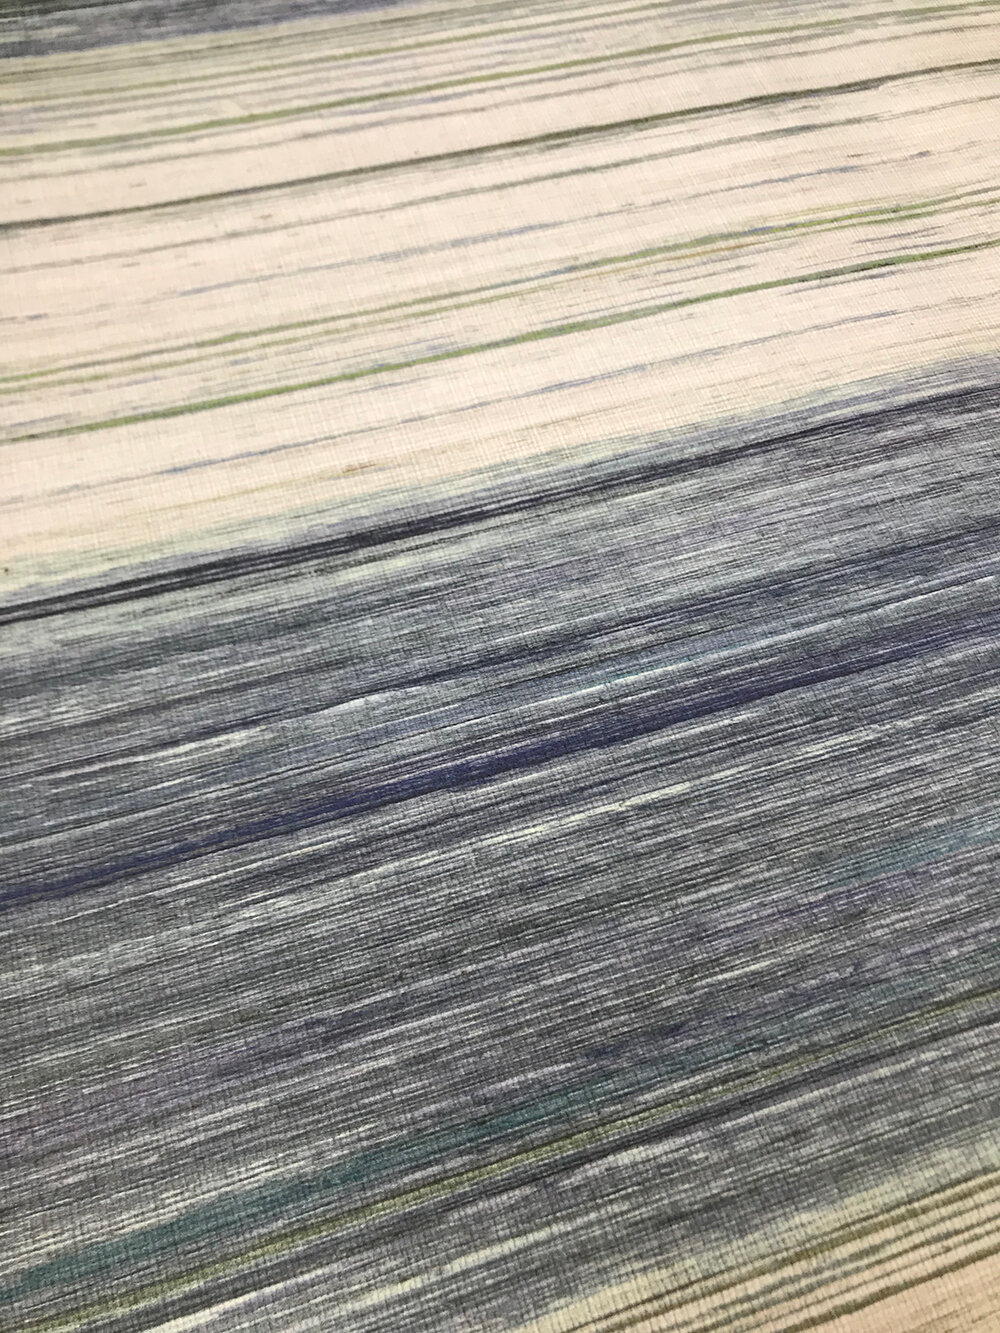 Kozo Stripe Wallpaper - Indigo - by Osborne & Little